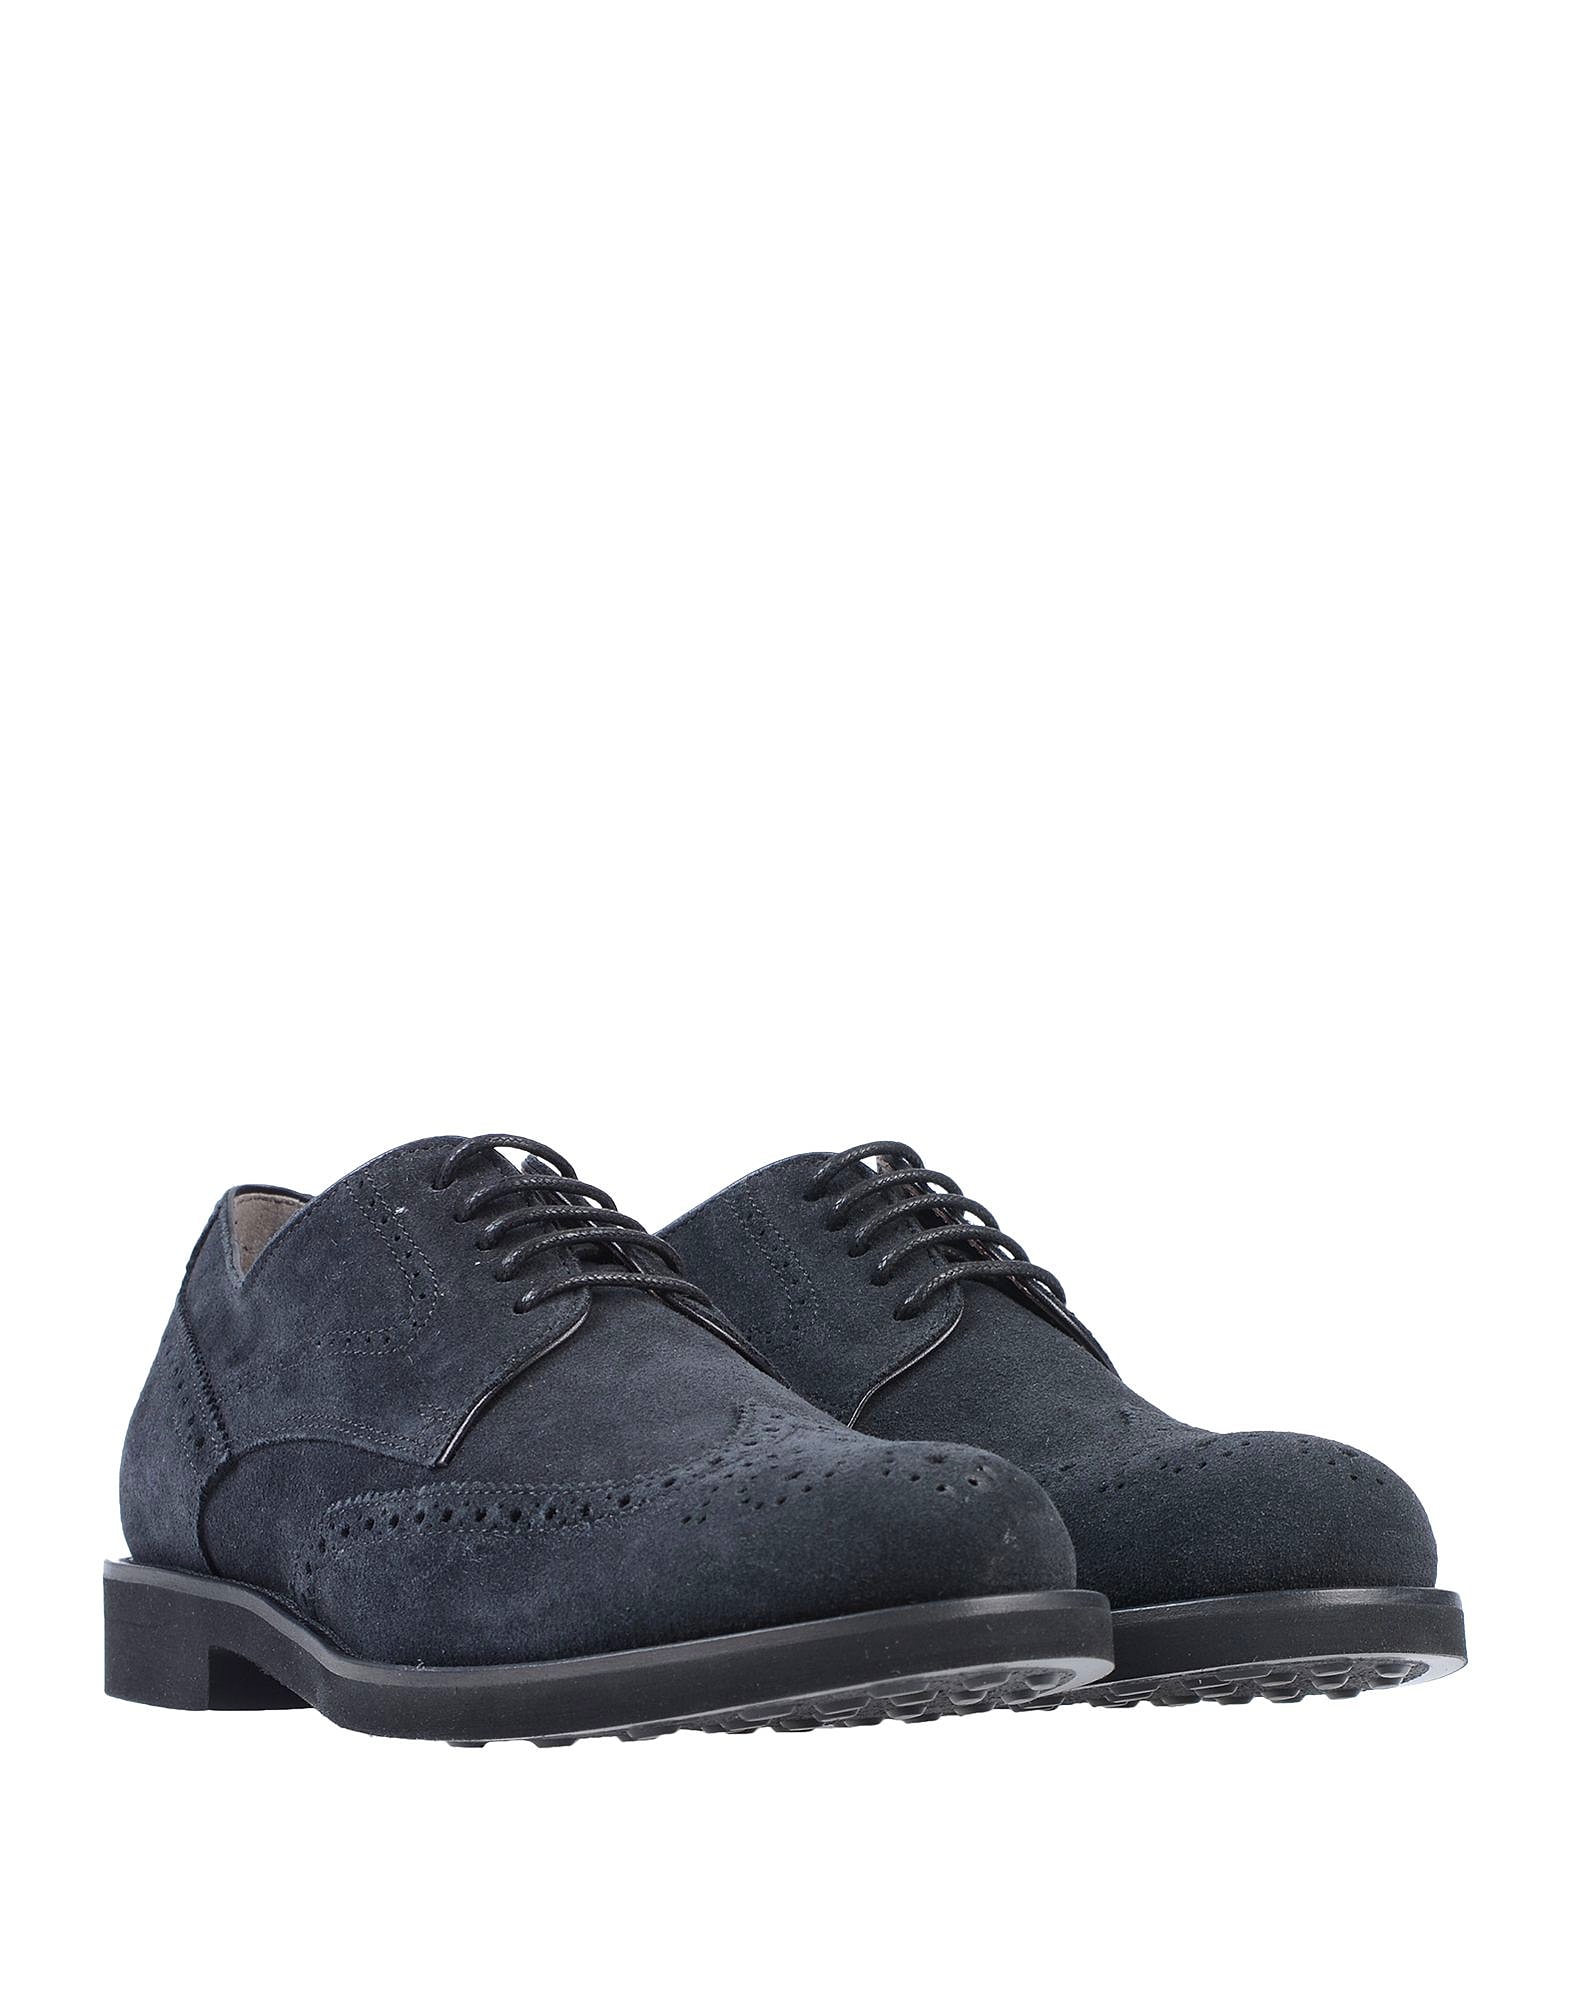 Tod's Men's DERBY Shoes Oxfords Sneakers Black Suede Wingtip | eBay